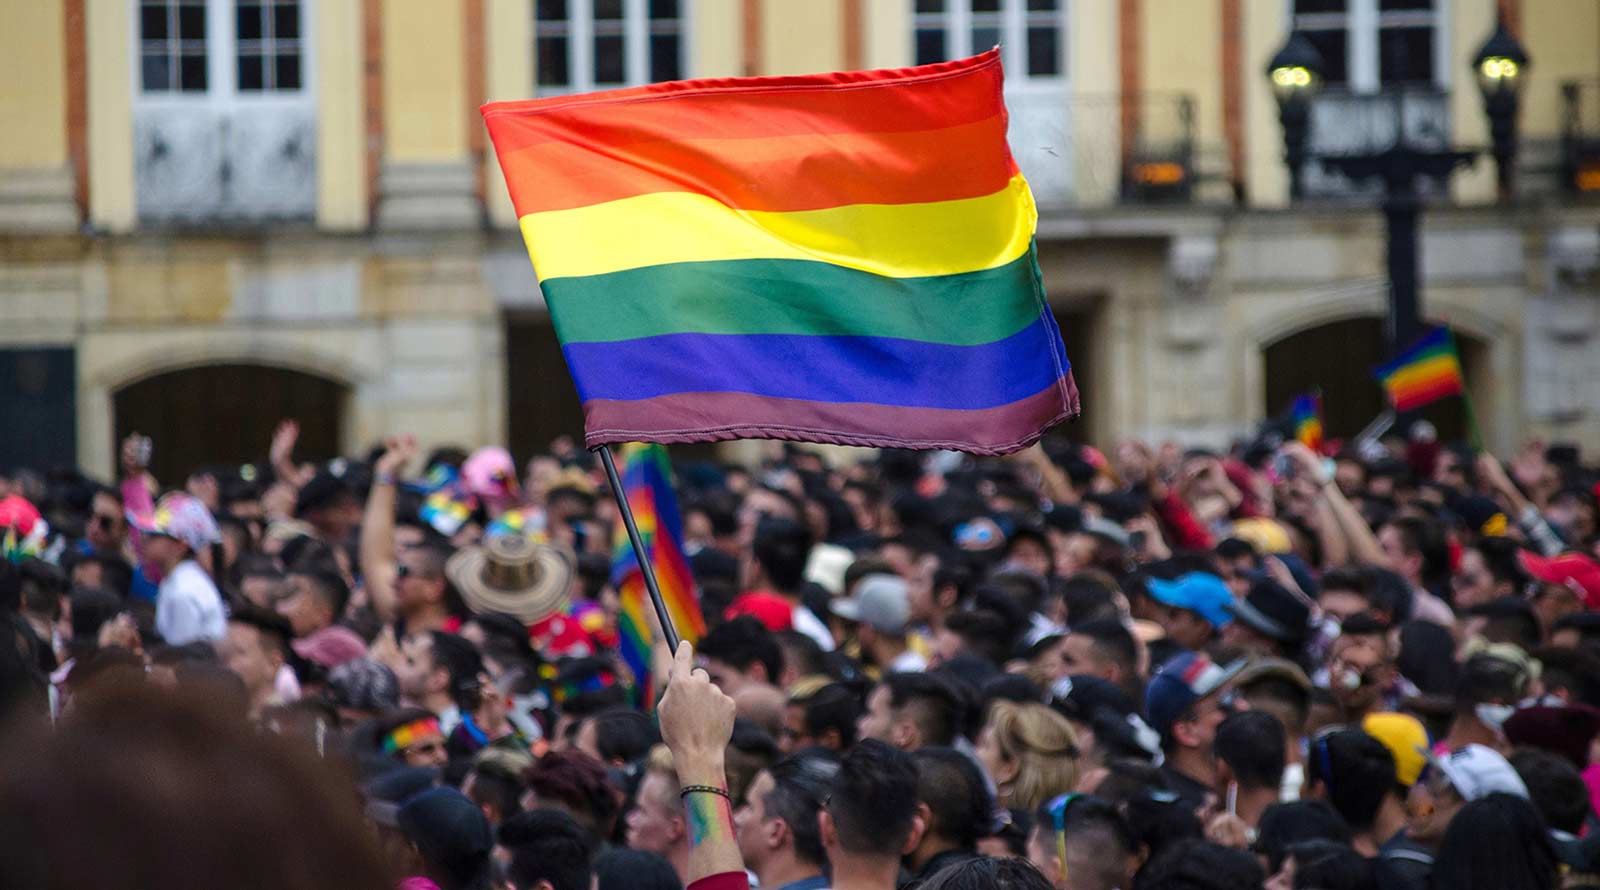 Rainbow Flag in crowd against building